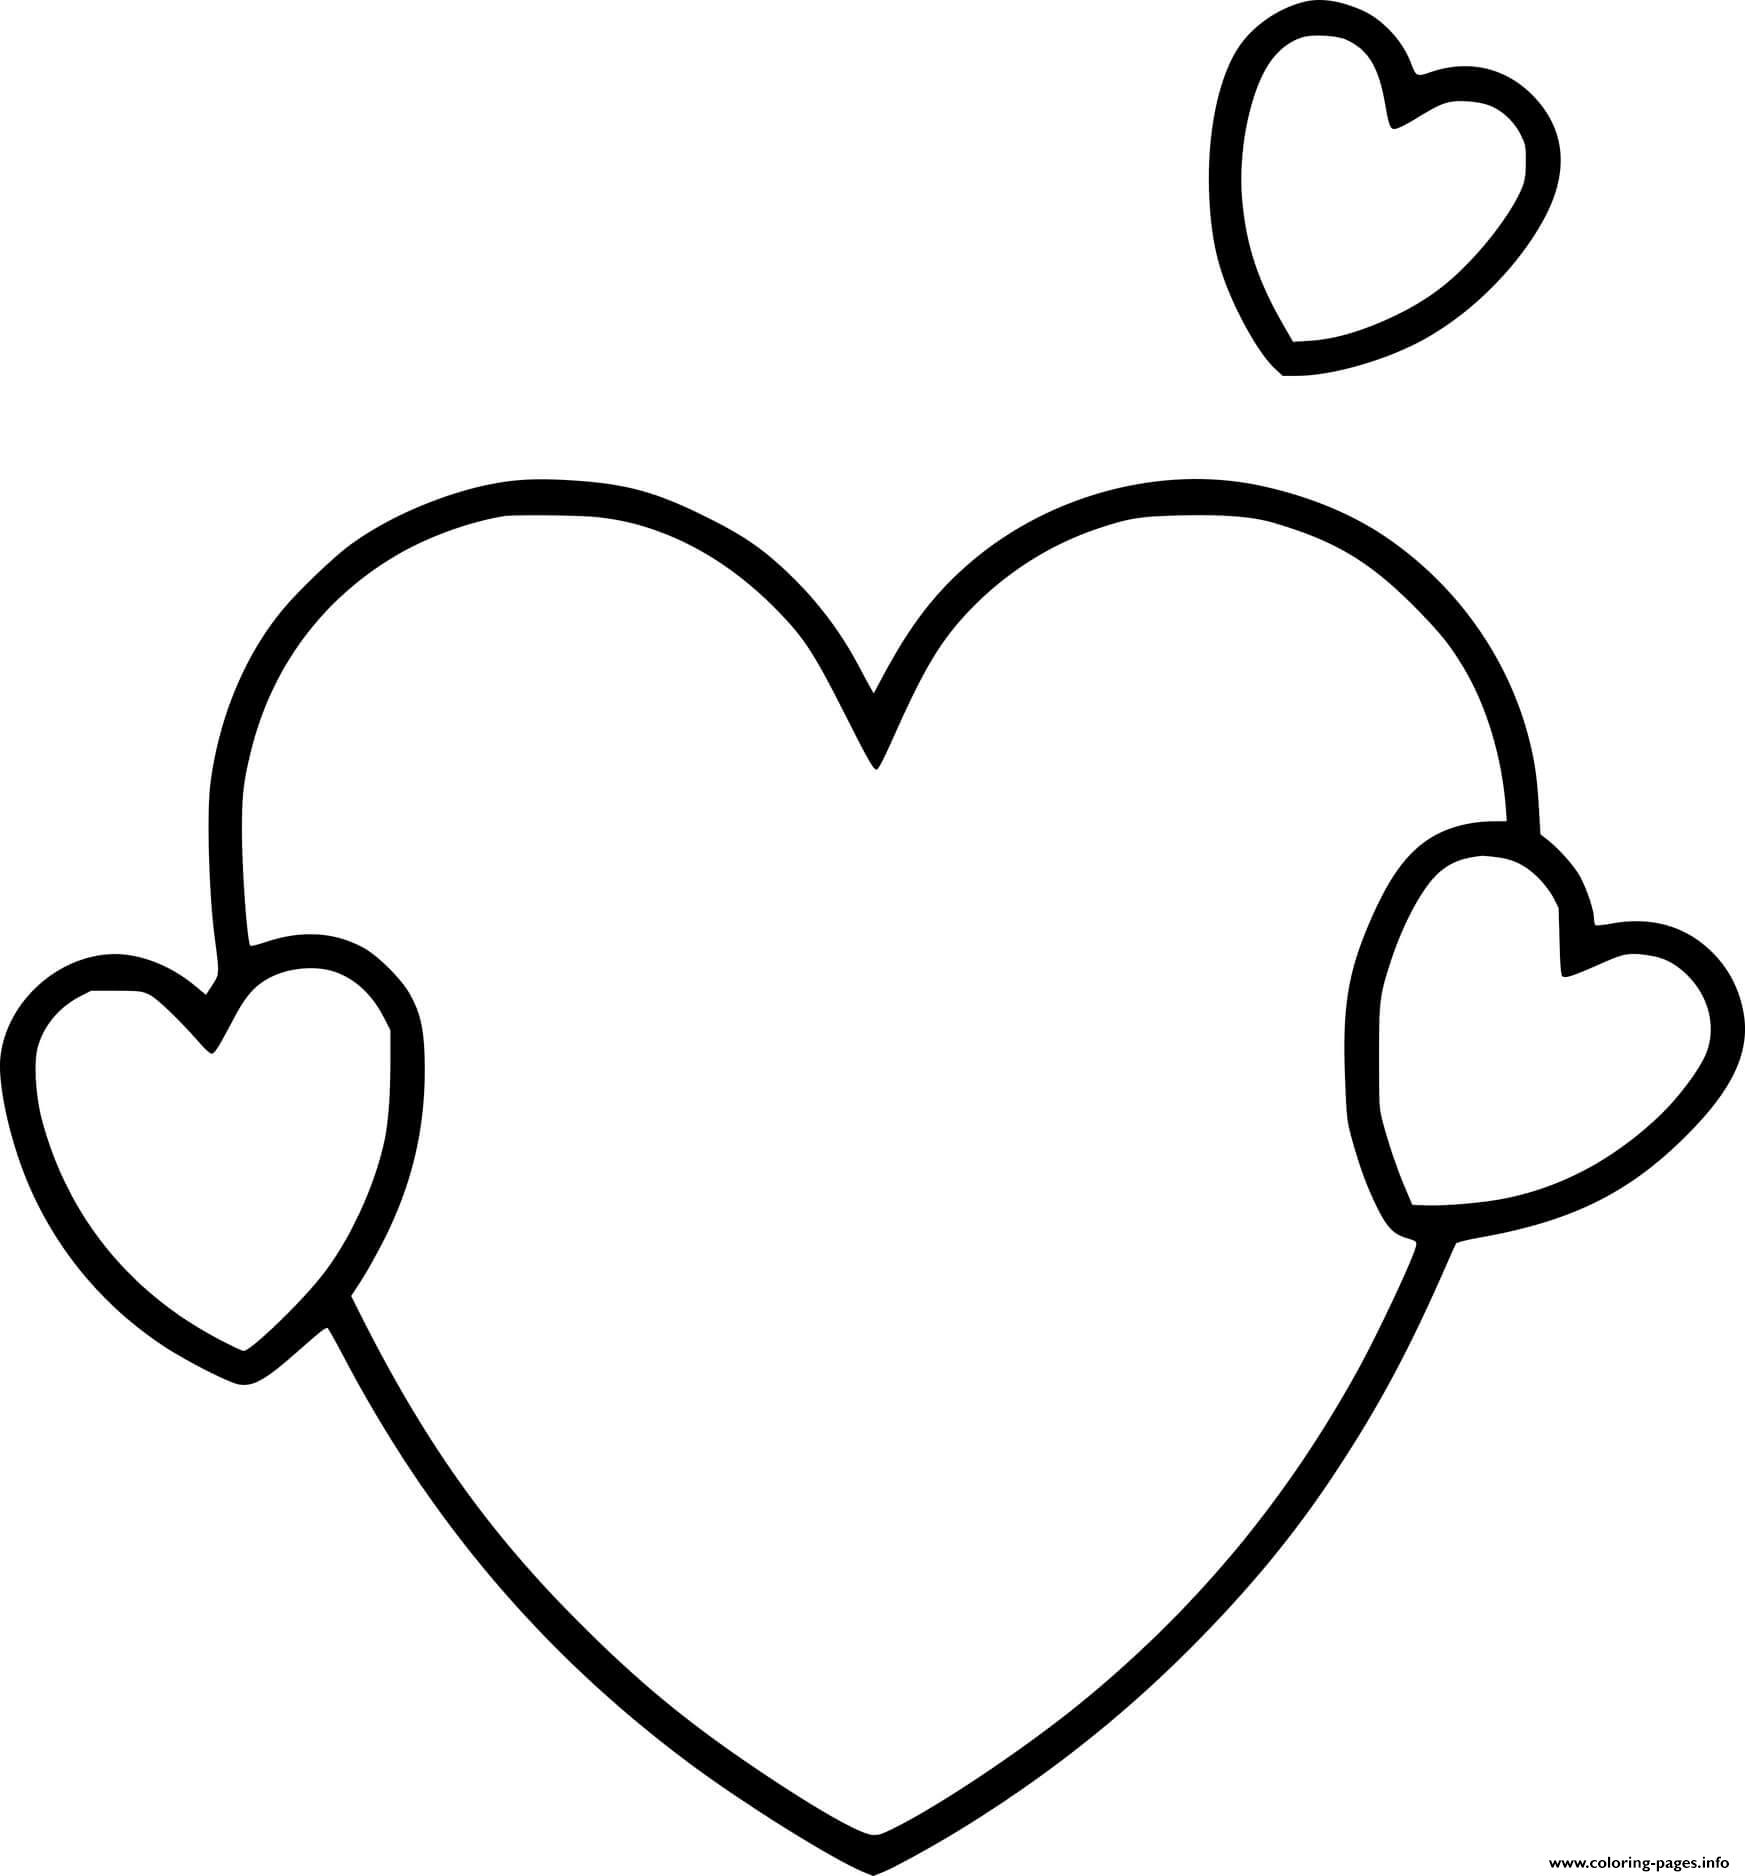 Картинки раскраски легкие. Раскраска сердечко. Сердечко раскраска для детей. Сердце рисунок. Картинки для раскрашивания сердечки.